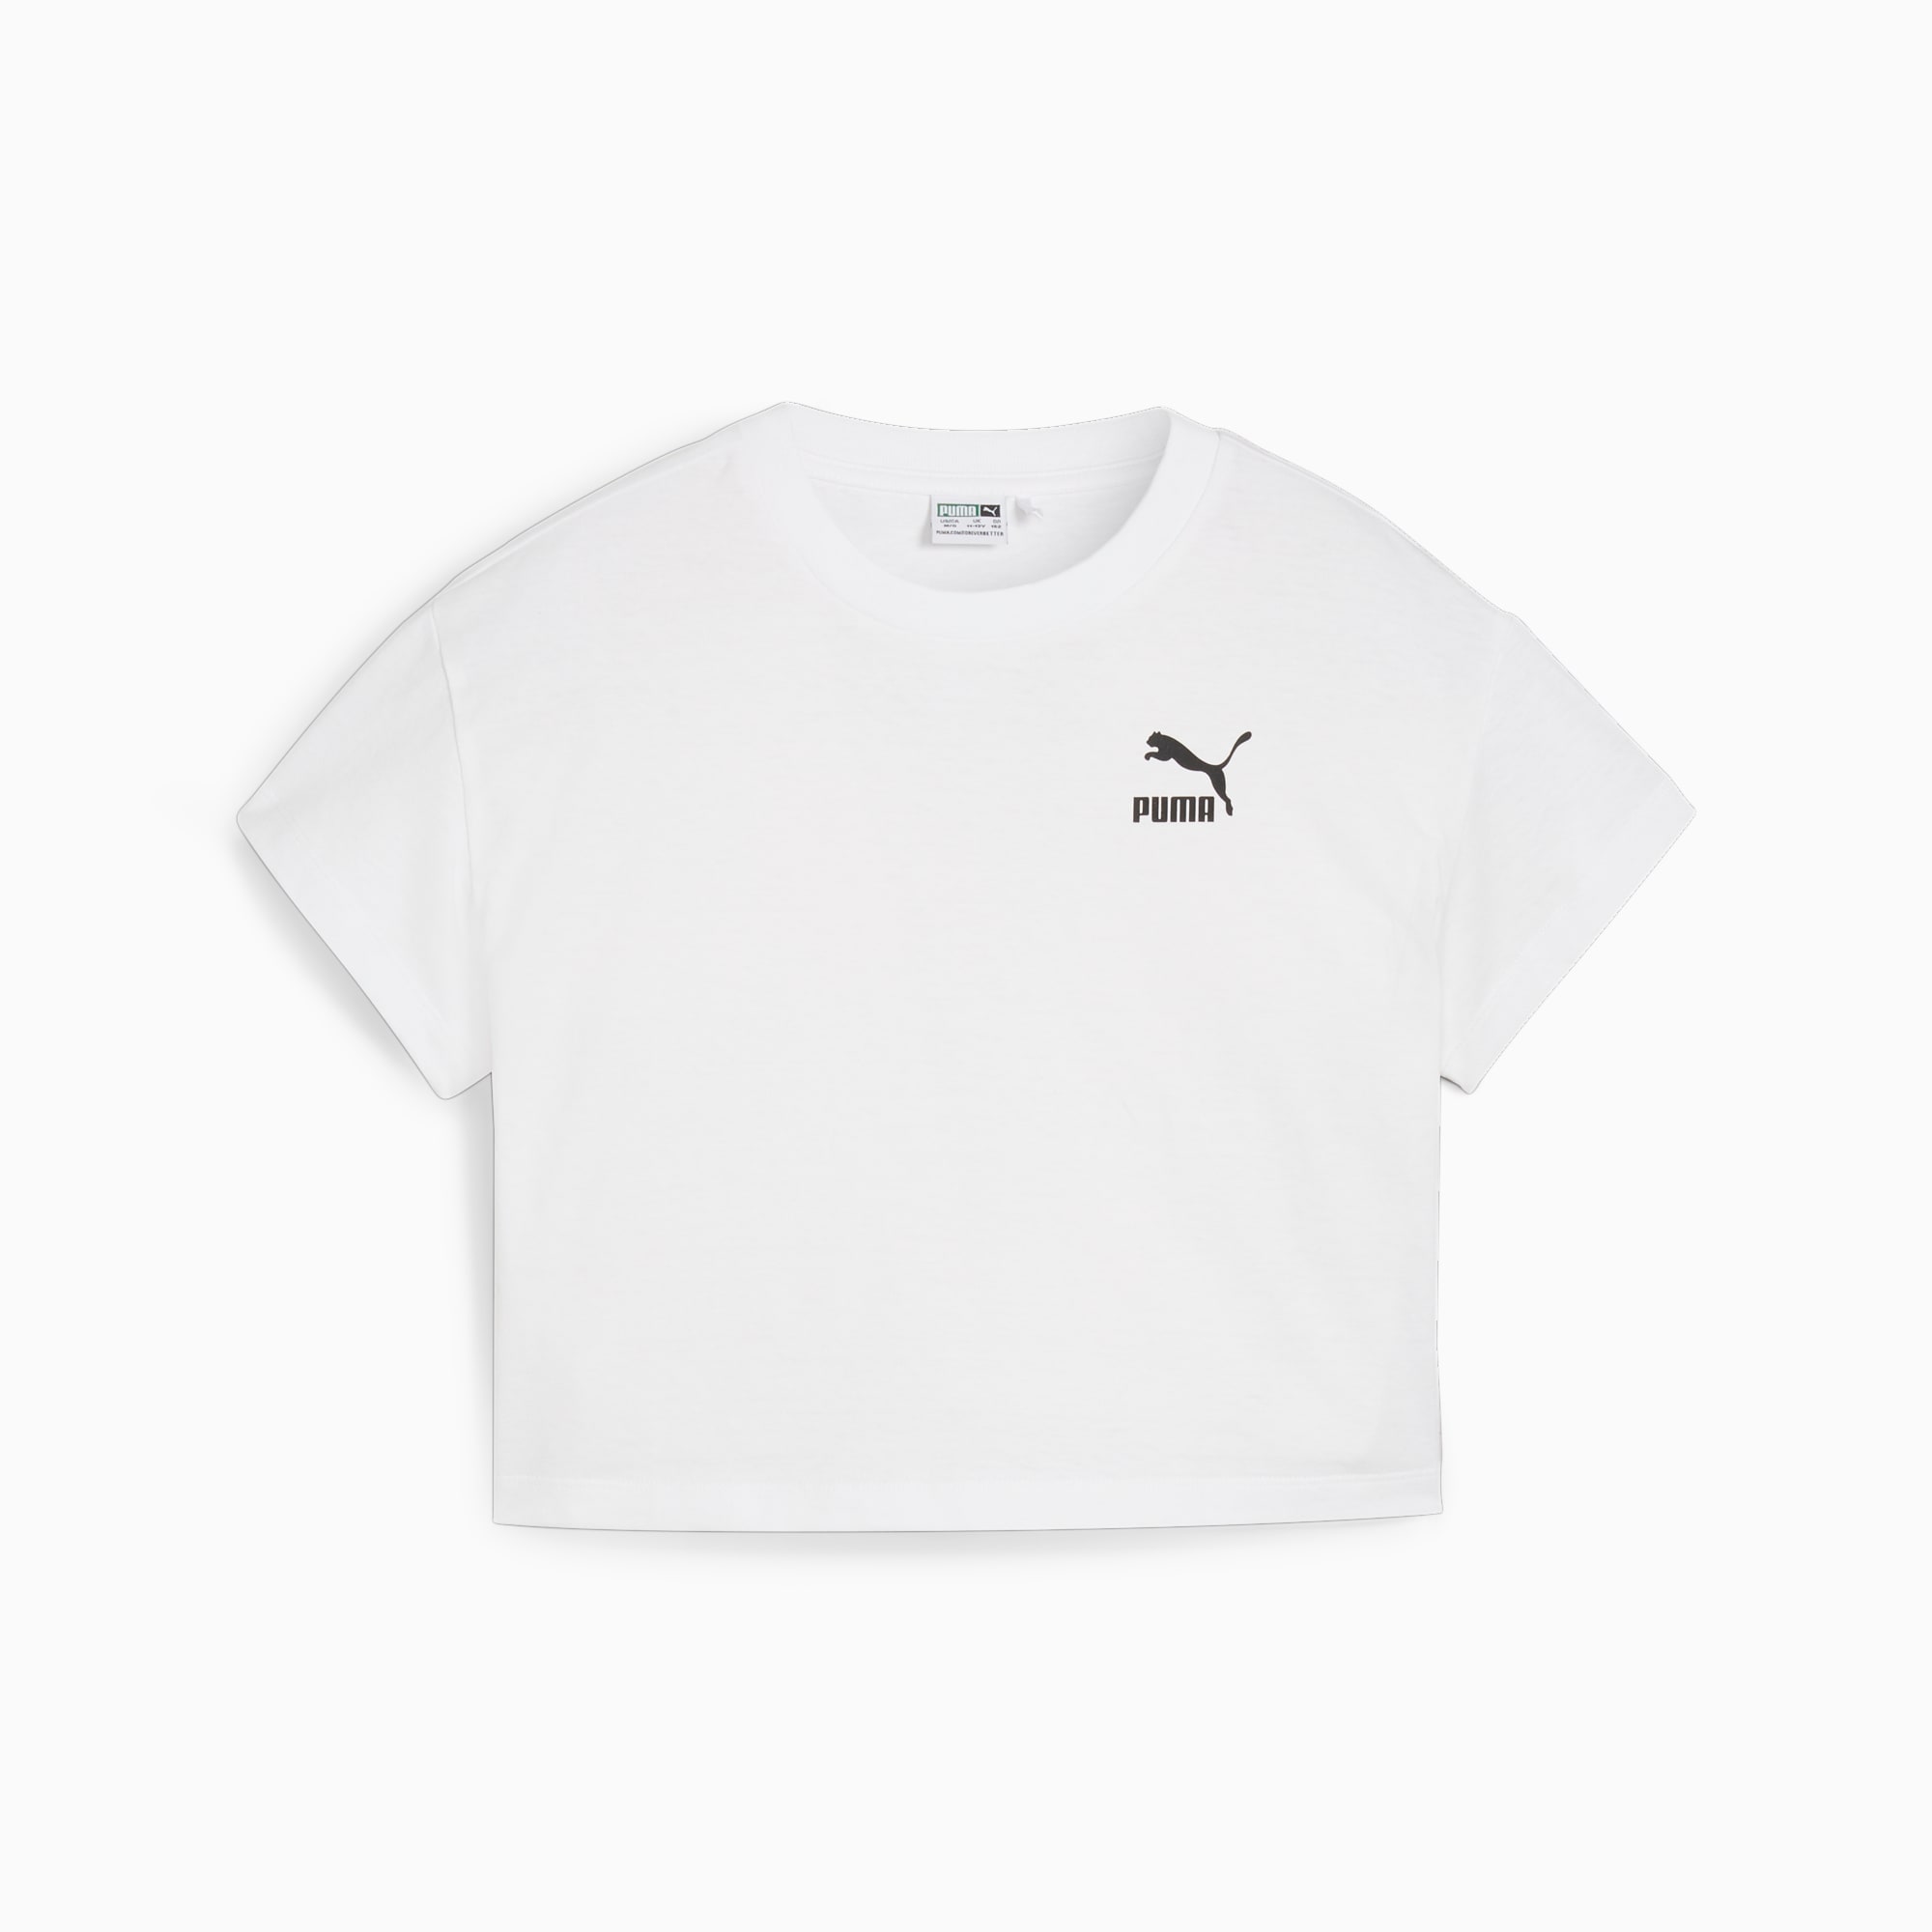 PUMA Better Classics Girl's T-Shirt, White, Size 128, Clothing